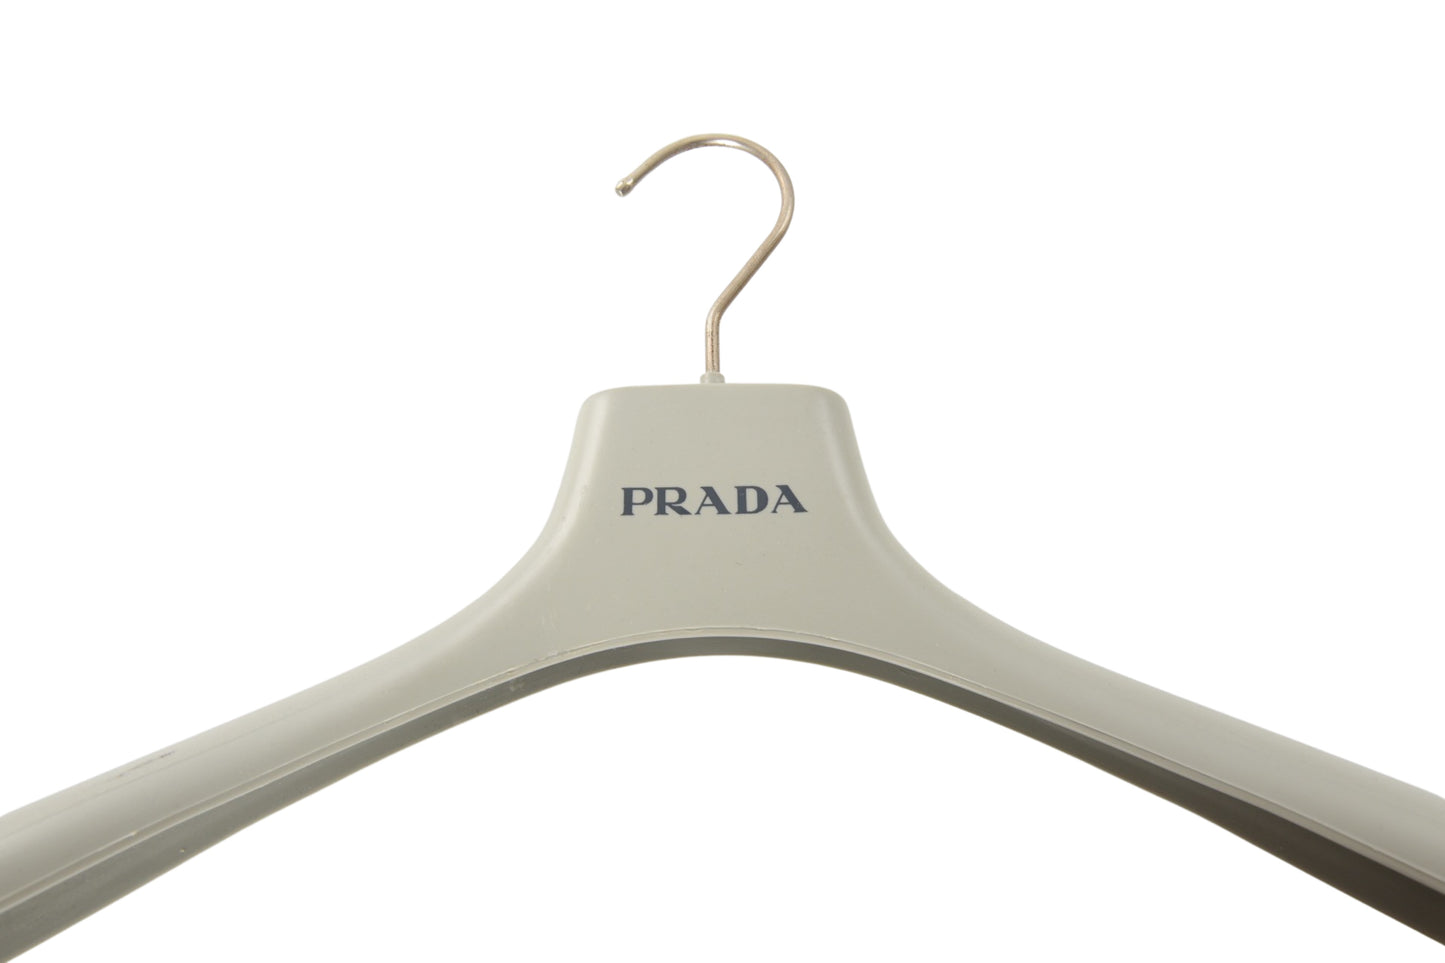 Prada Clothing Suit Hanger Vintage